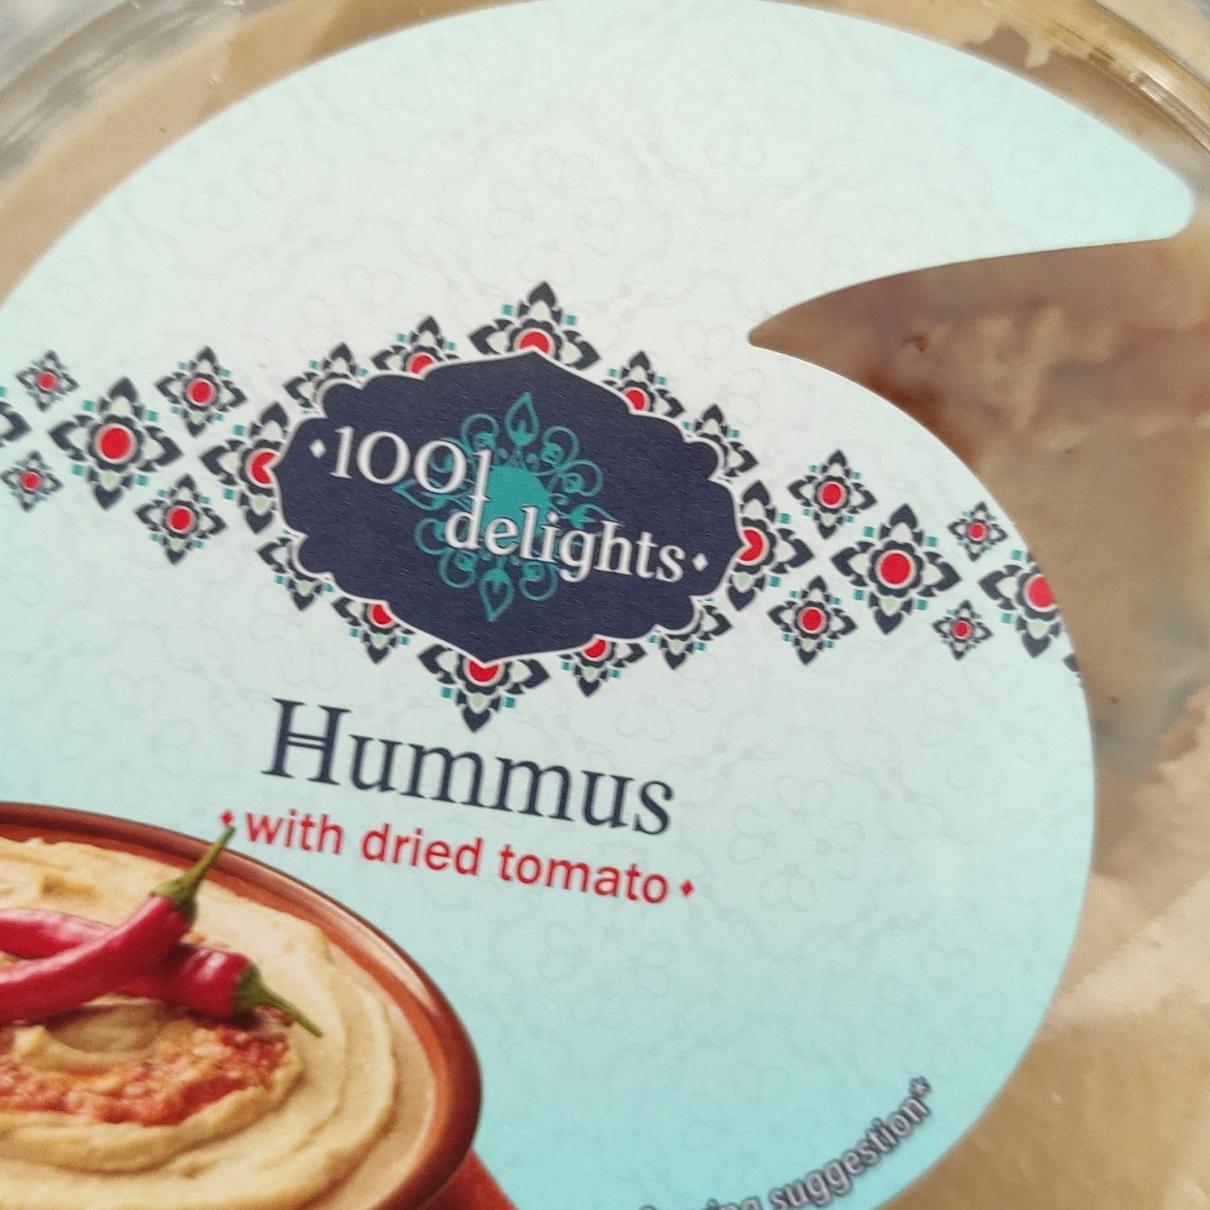 Фото - хумус с вялиными томатами 1001 delights